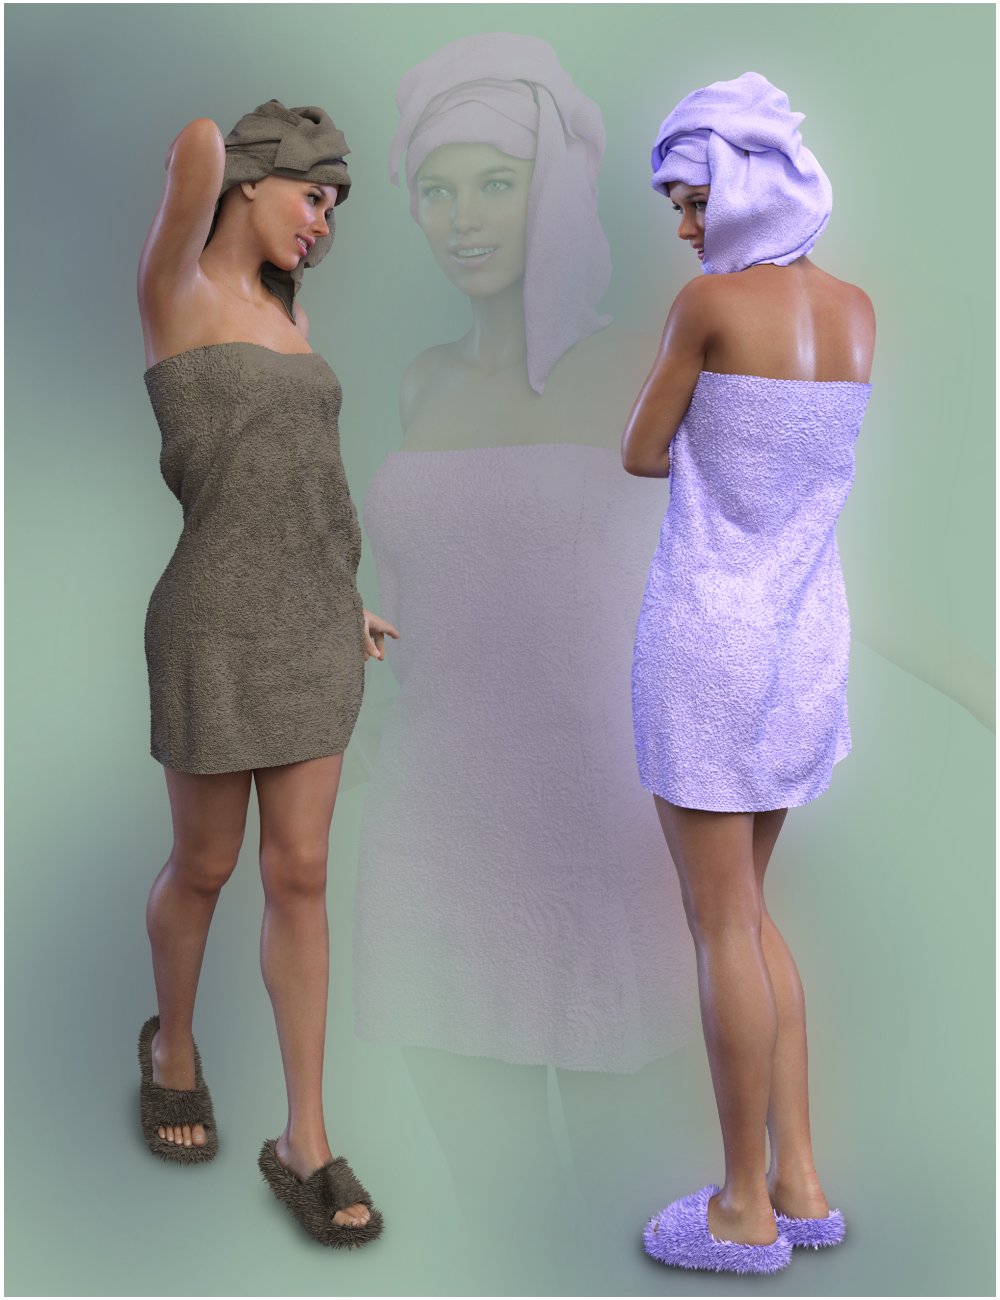 dForce FG Luxury Bathroom Towel Set by: Valery3DFugazi1968, 3D Models by Daz 3D